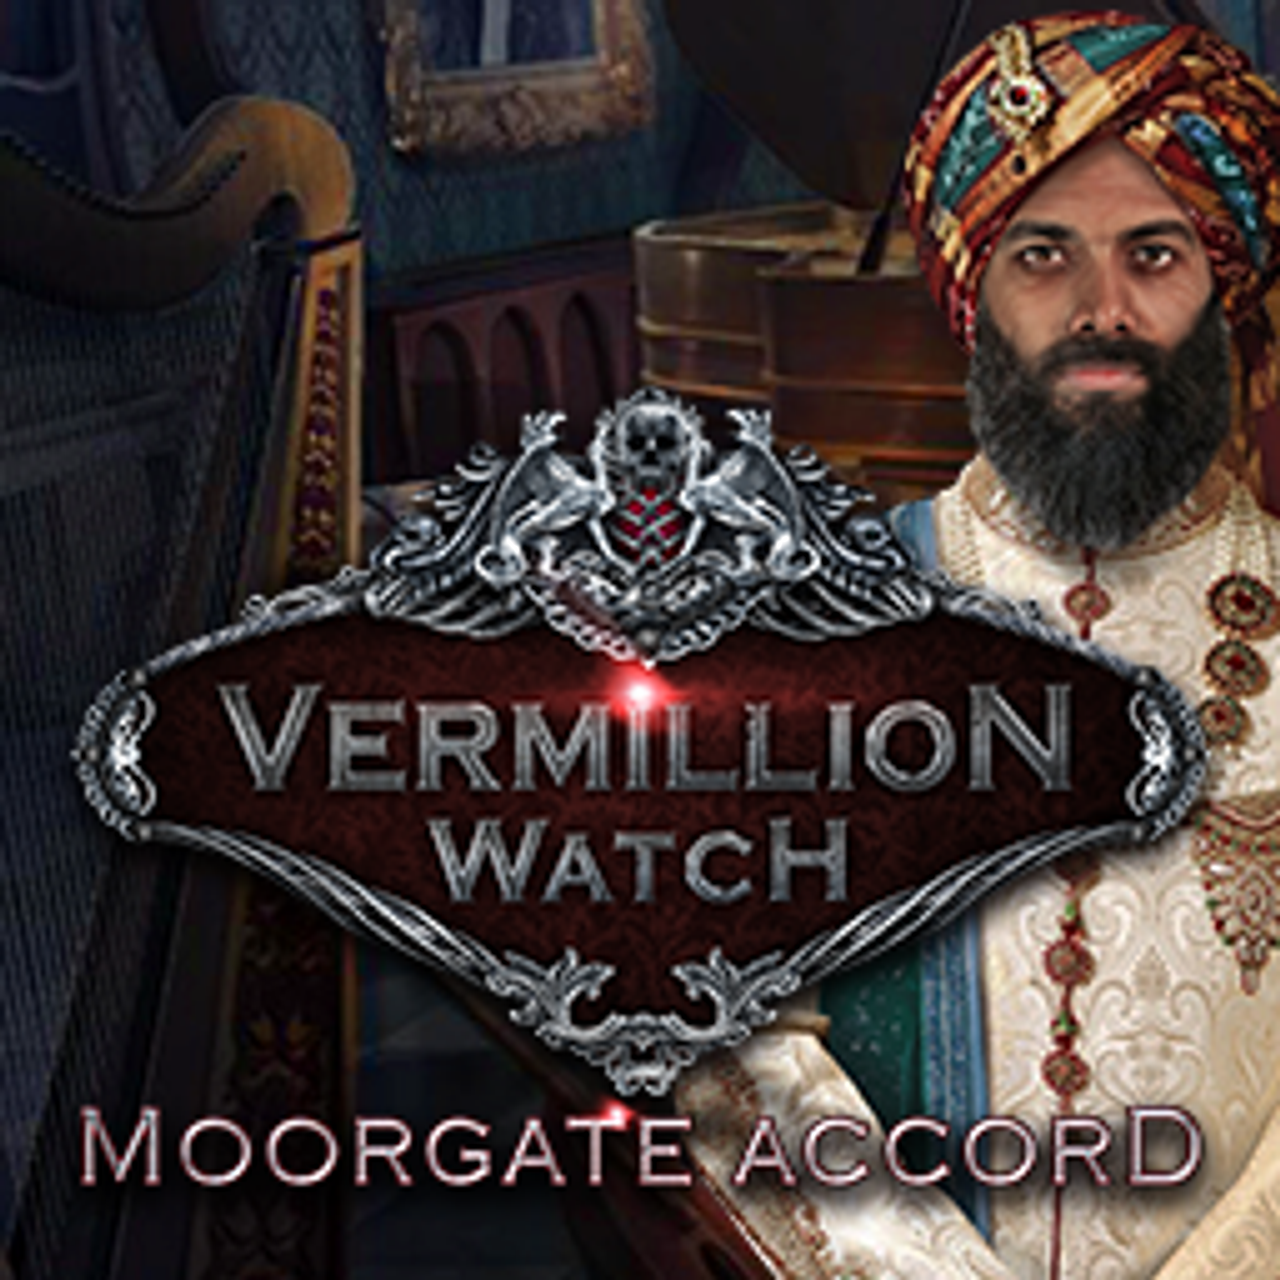 Vermillion Watch: Moorgate Accord